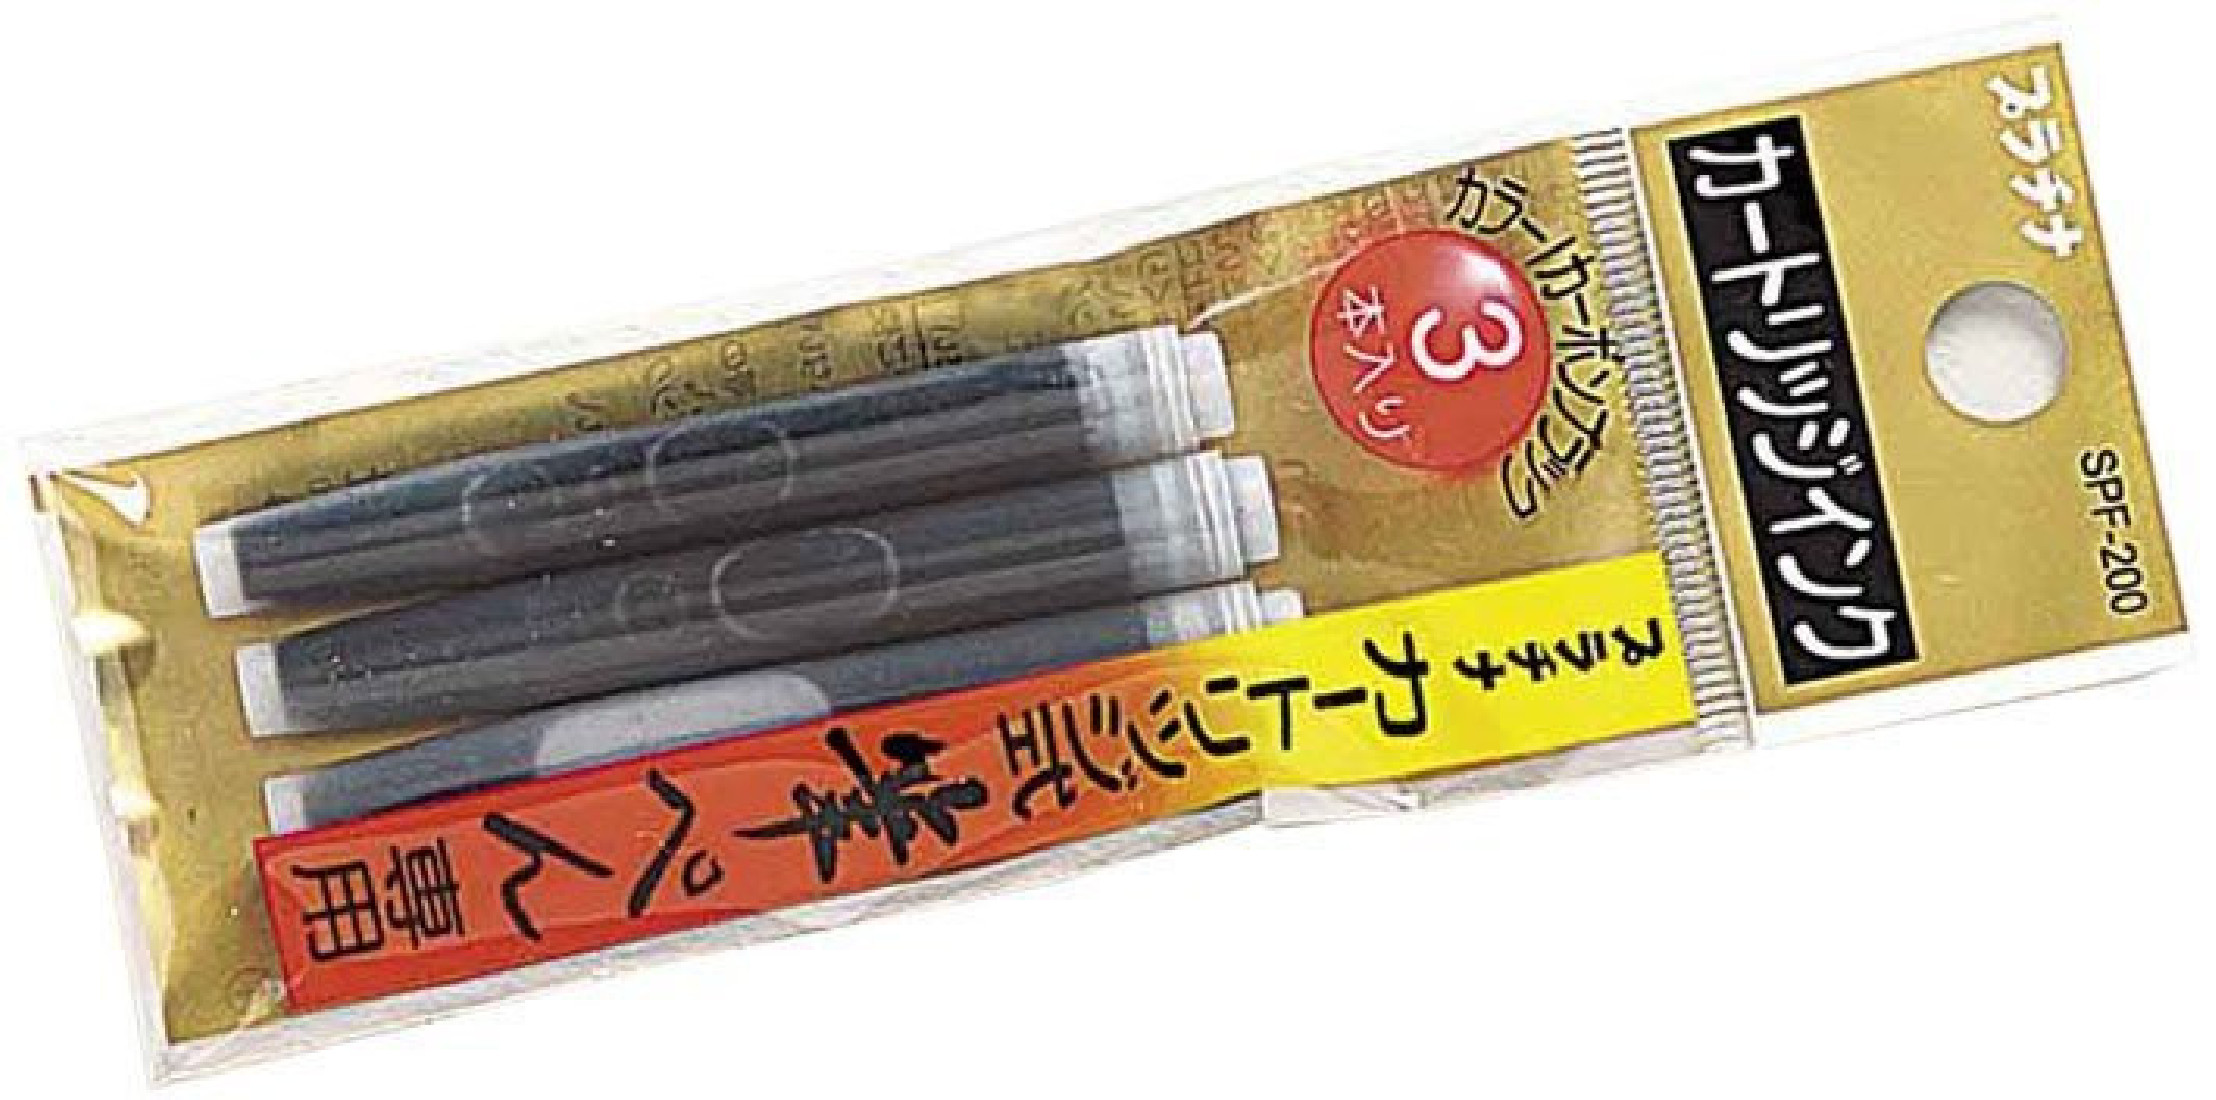 Platinum SPF-200 Brush Pen Spare Ink cartridges, set of 3